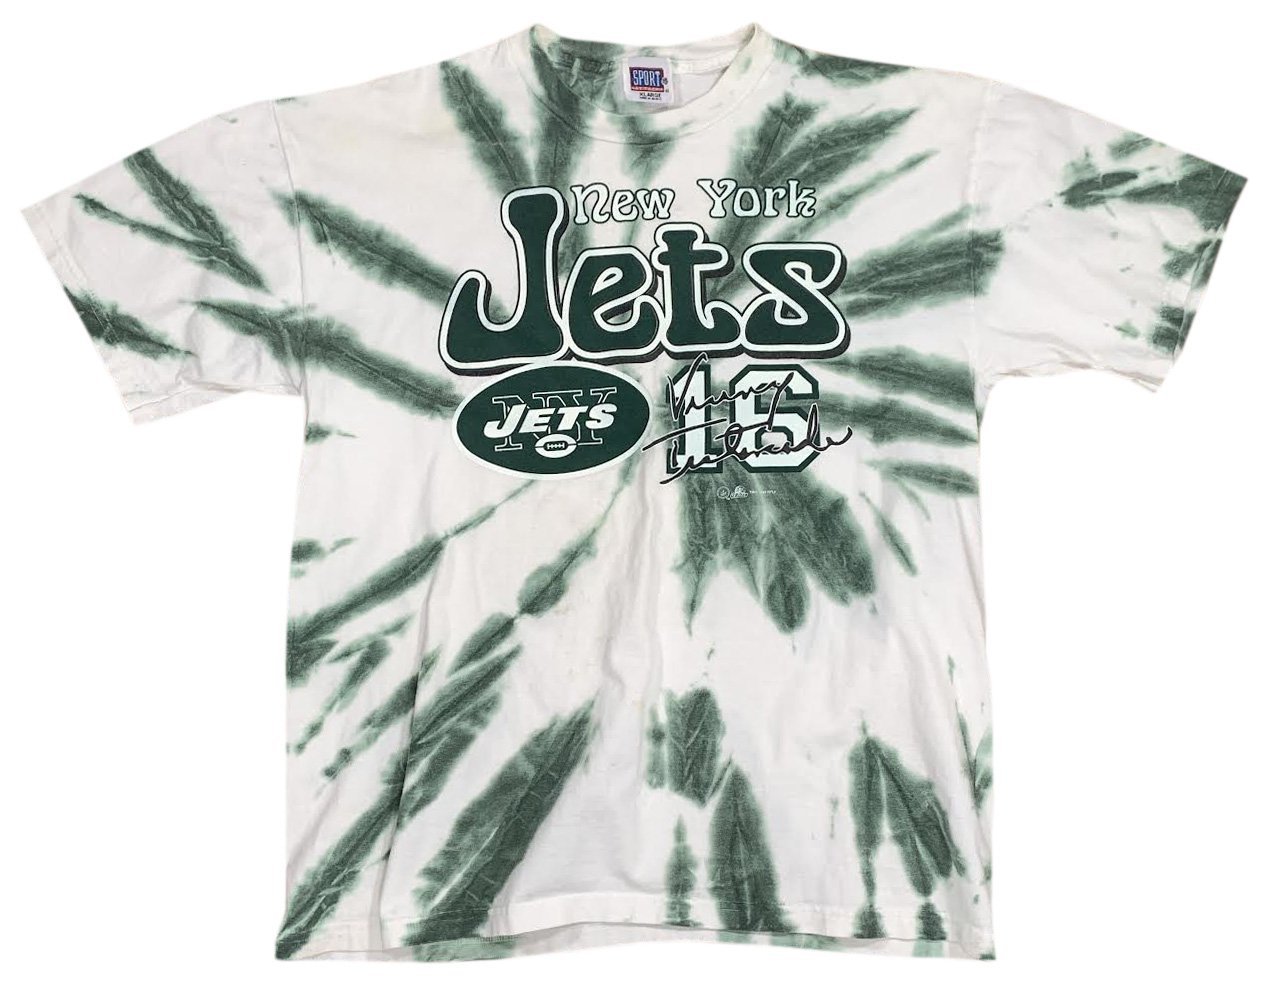 Vintage Vinny Testaverde New York Jets Champion Jersey YOUTH